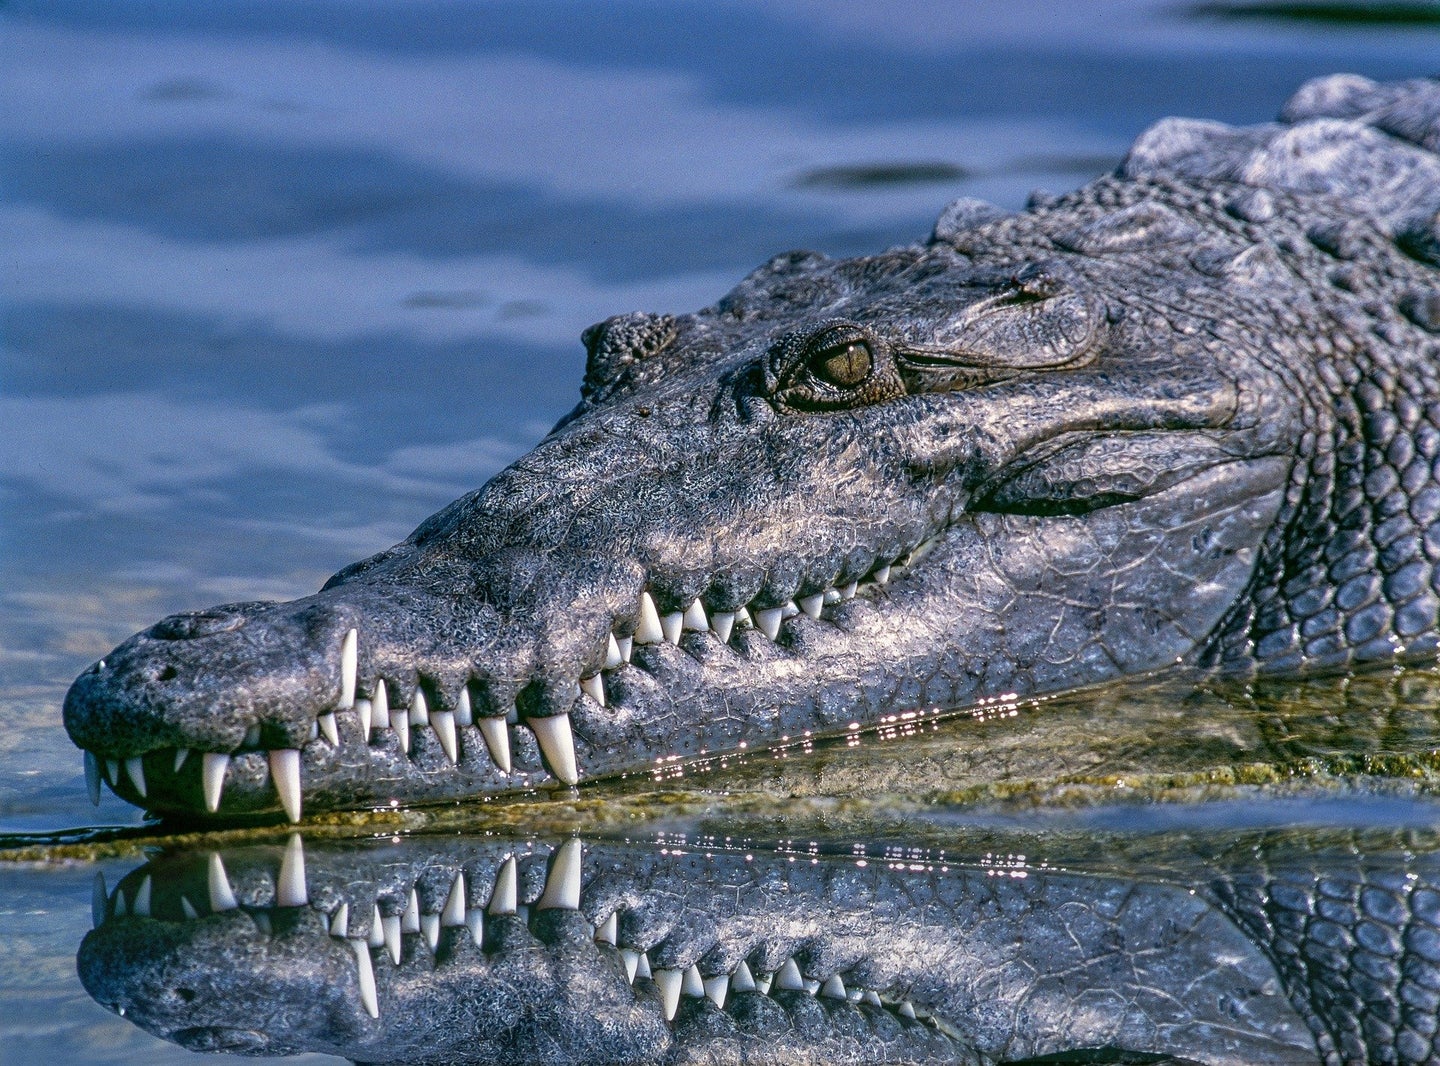 crocodile with teeth swims through water